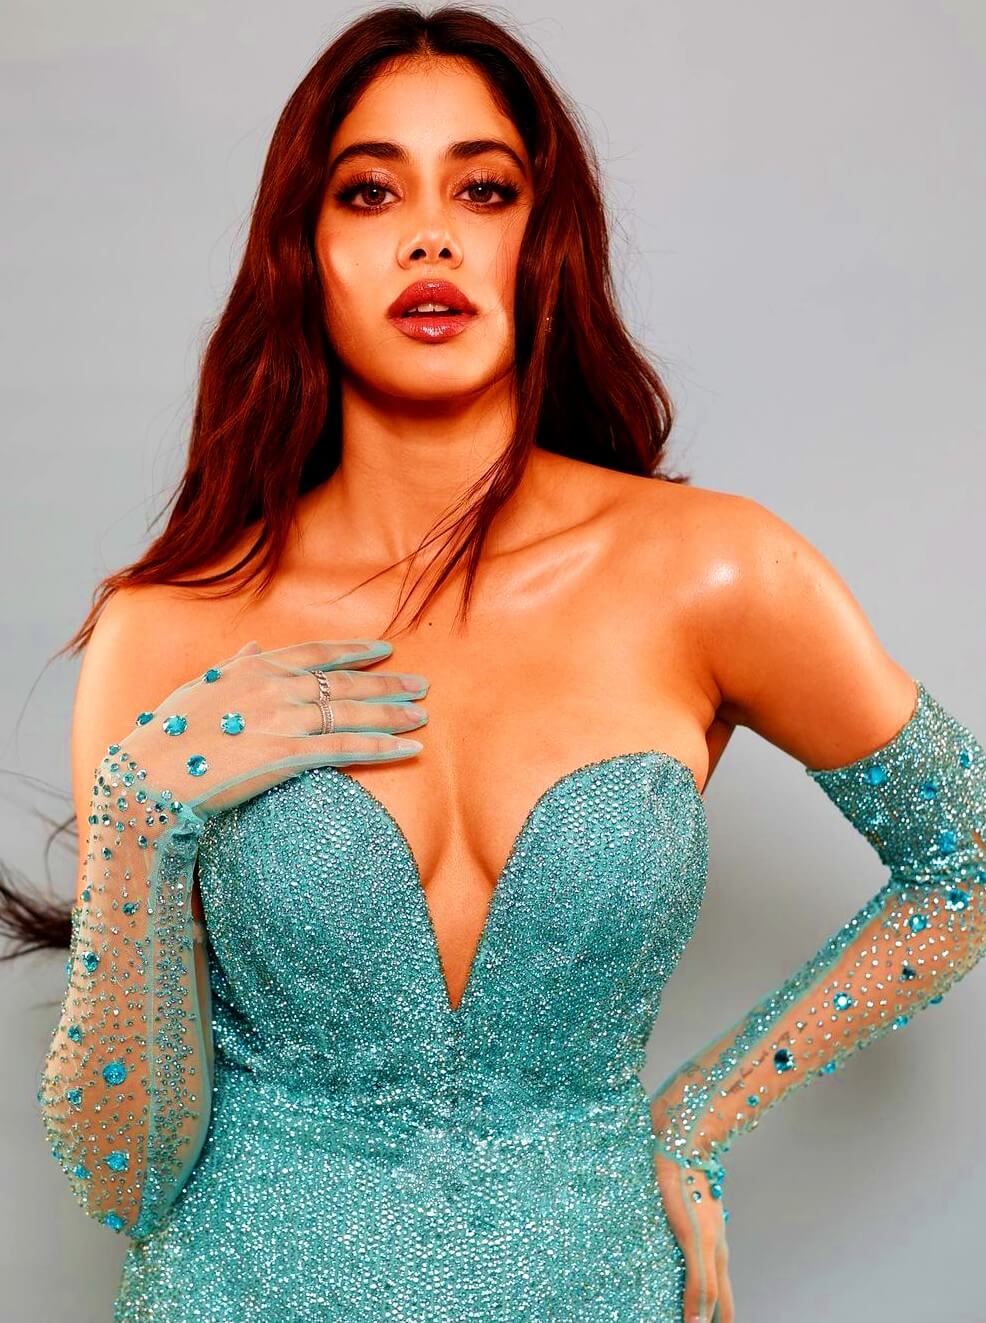 janhvi kapoor boobs showing aqua blue gown photo
